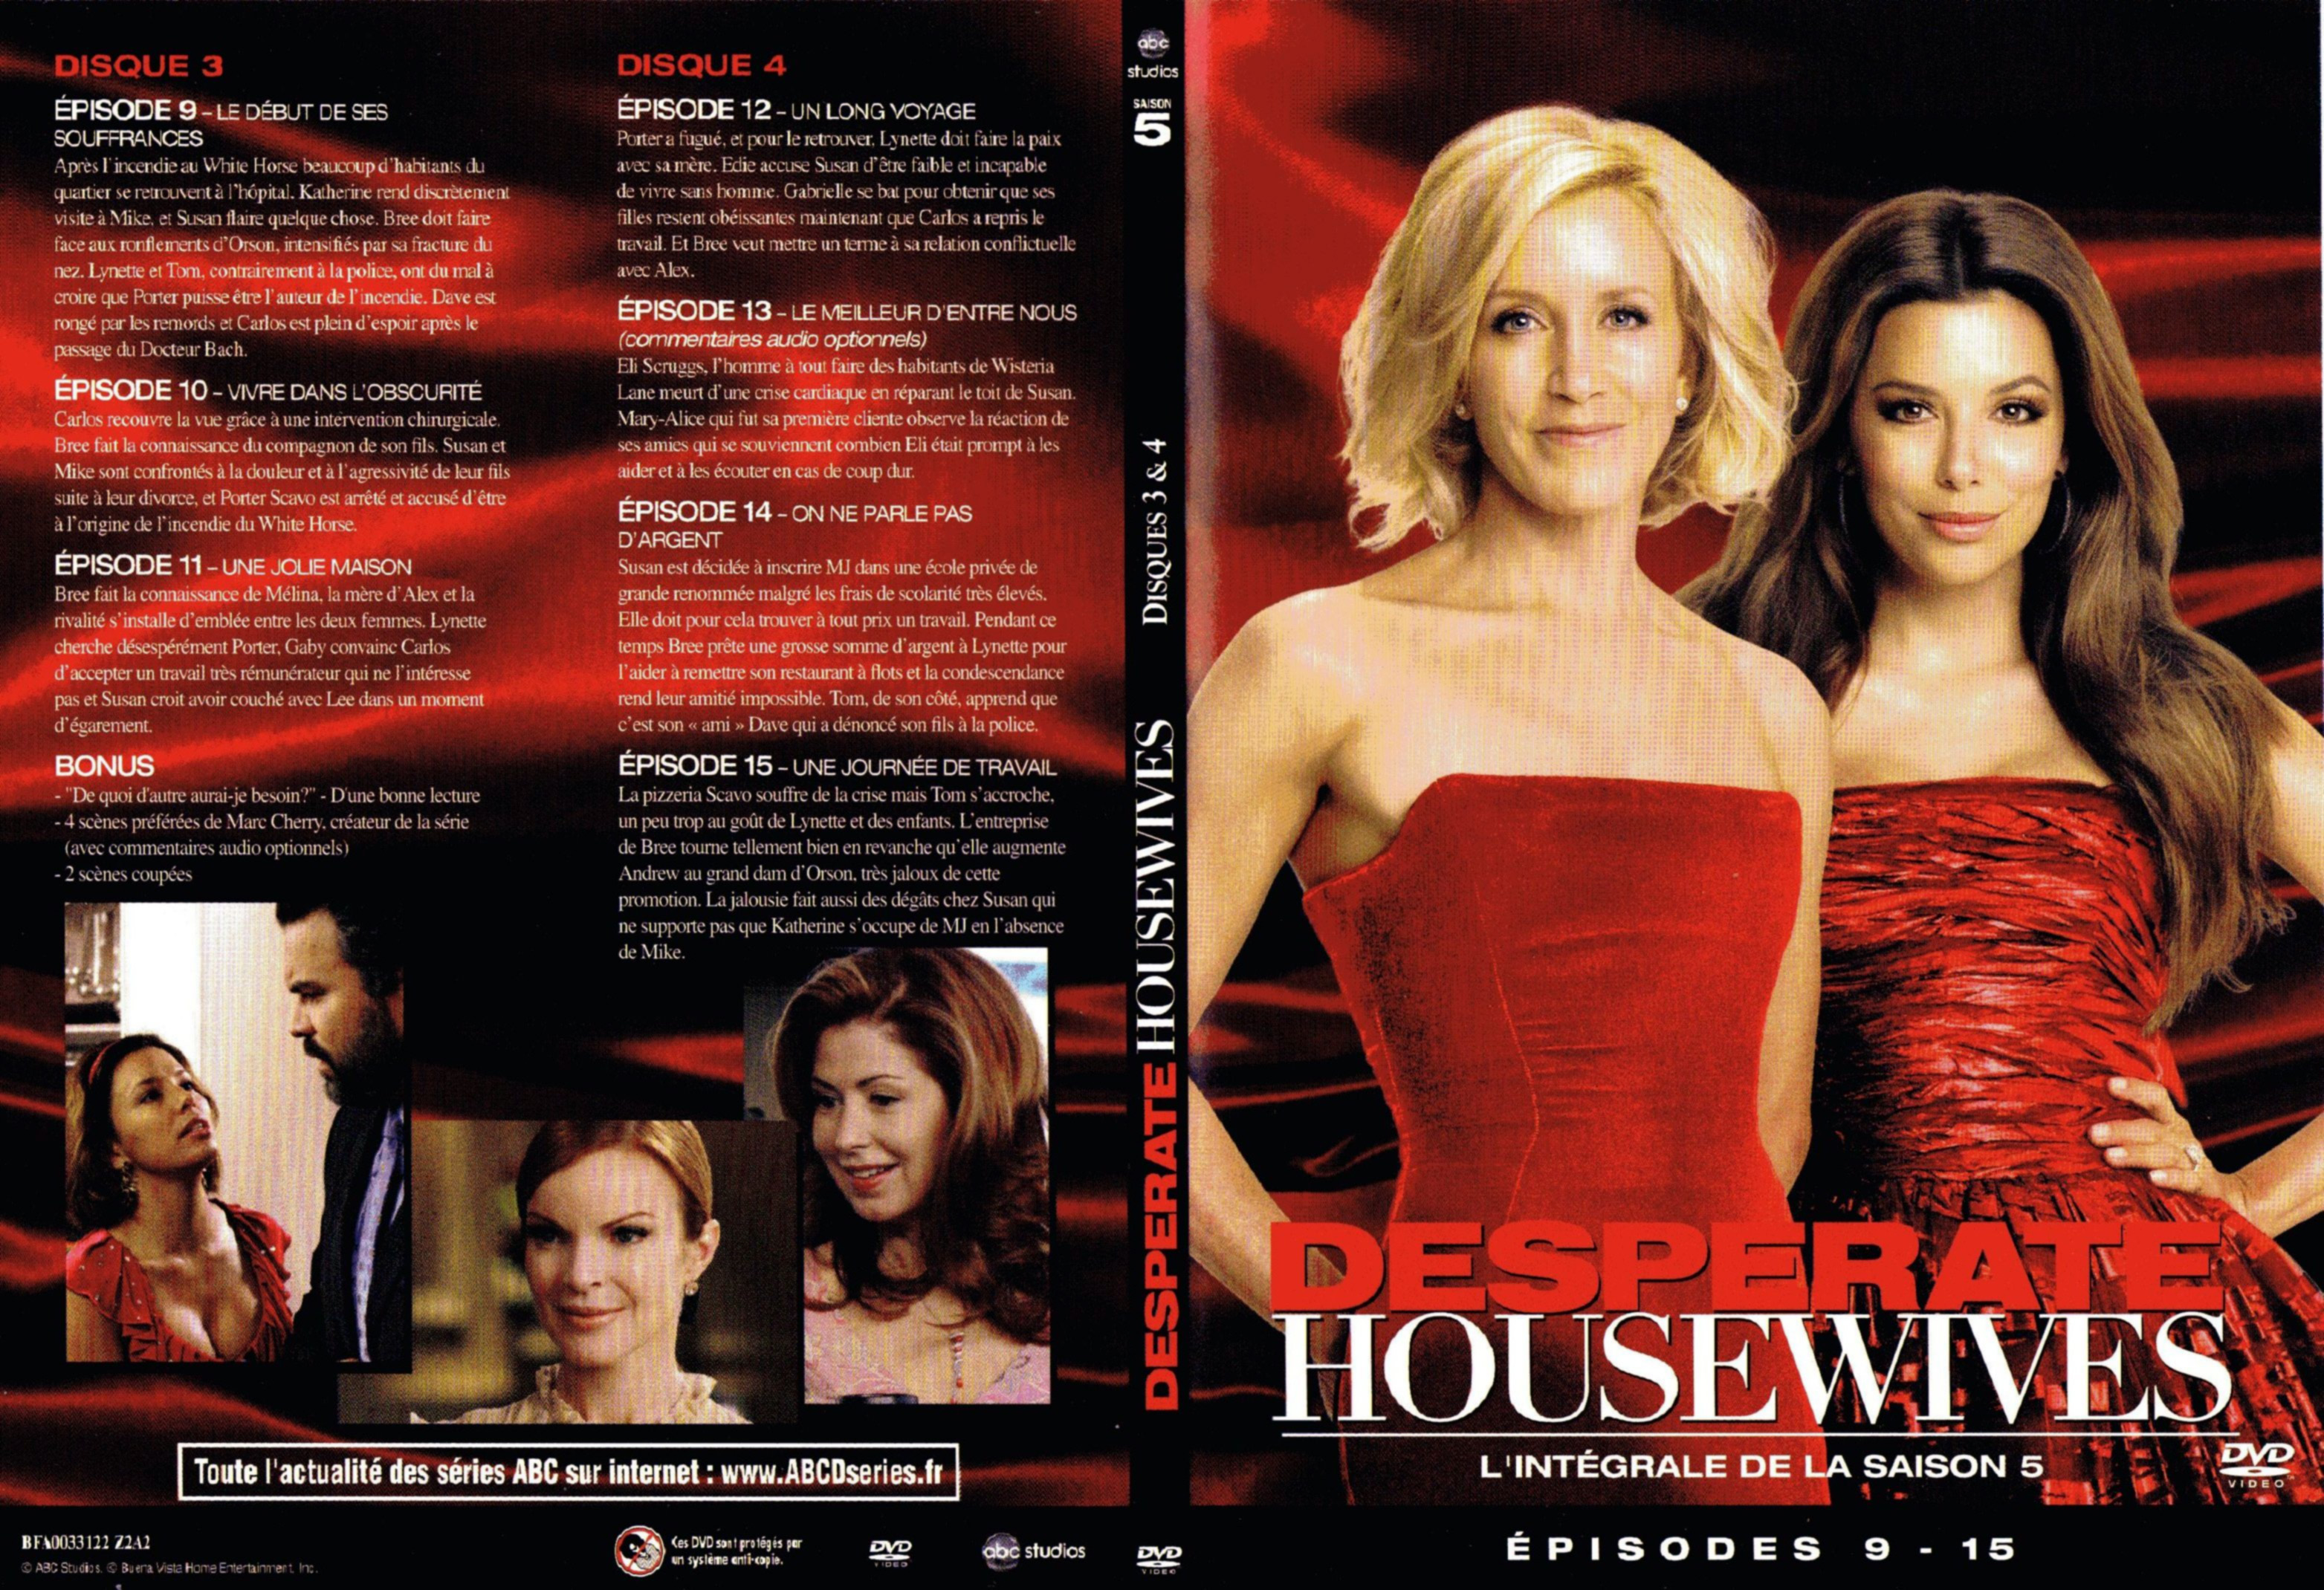 Jaquette DVD Desperate housewives Saison 5 DVD 2